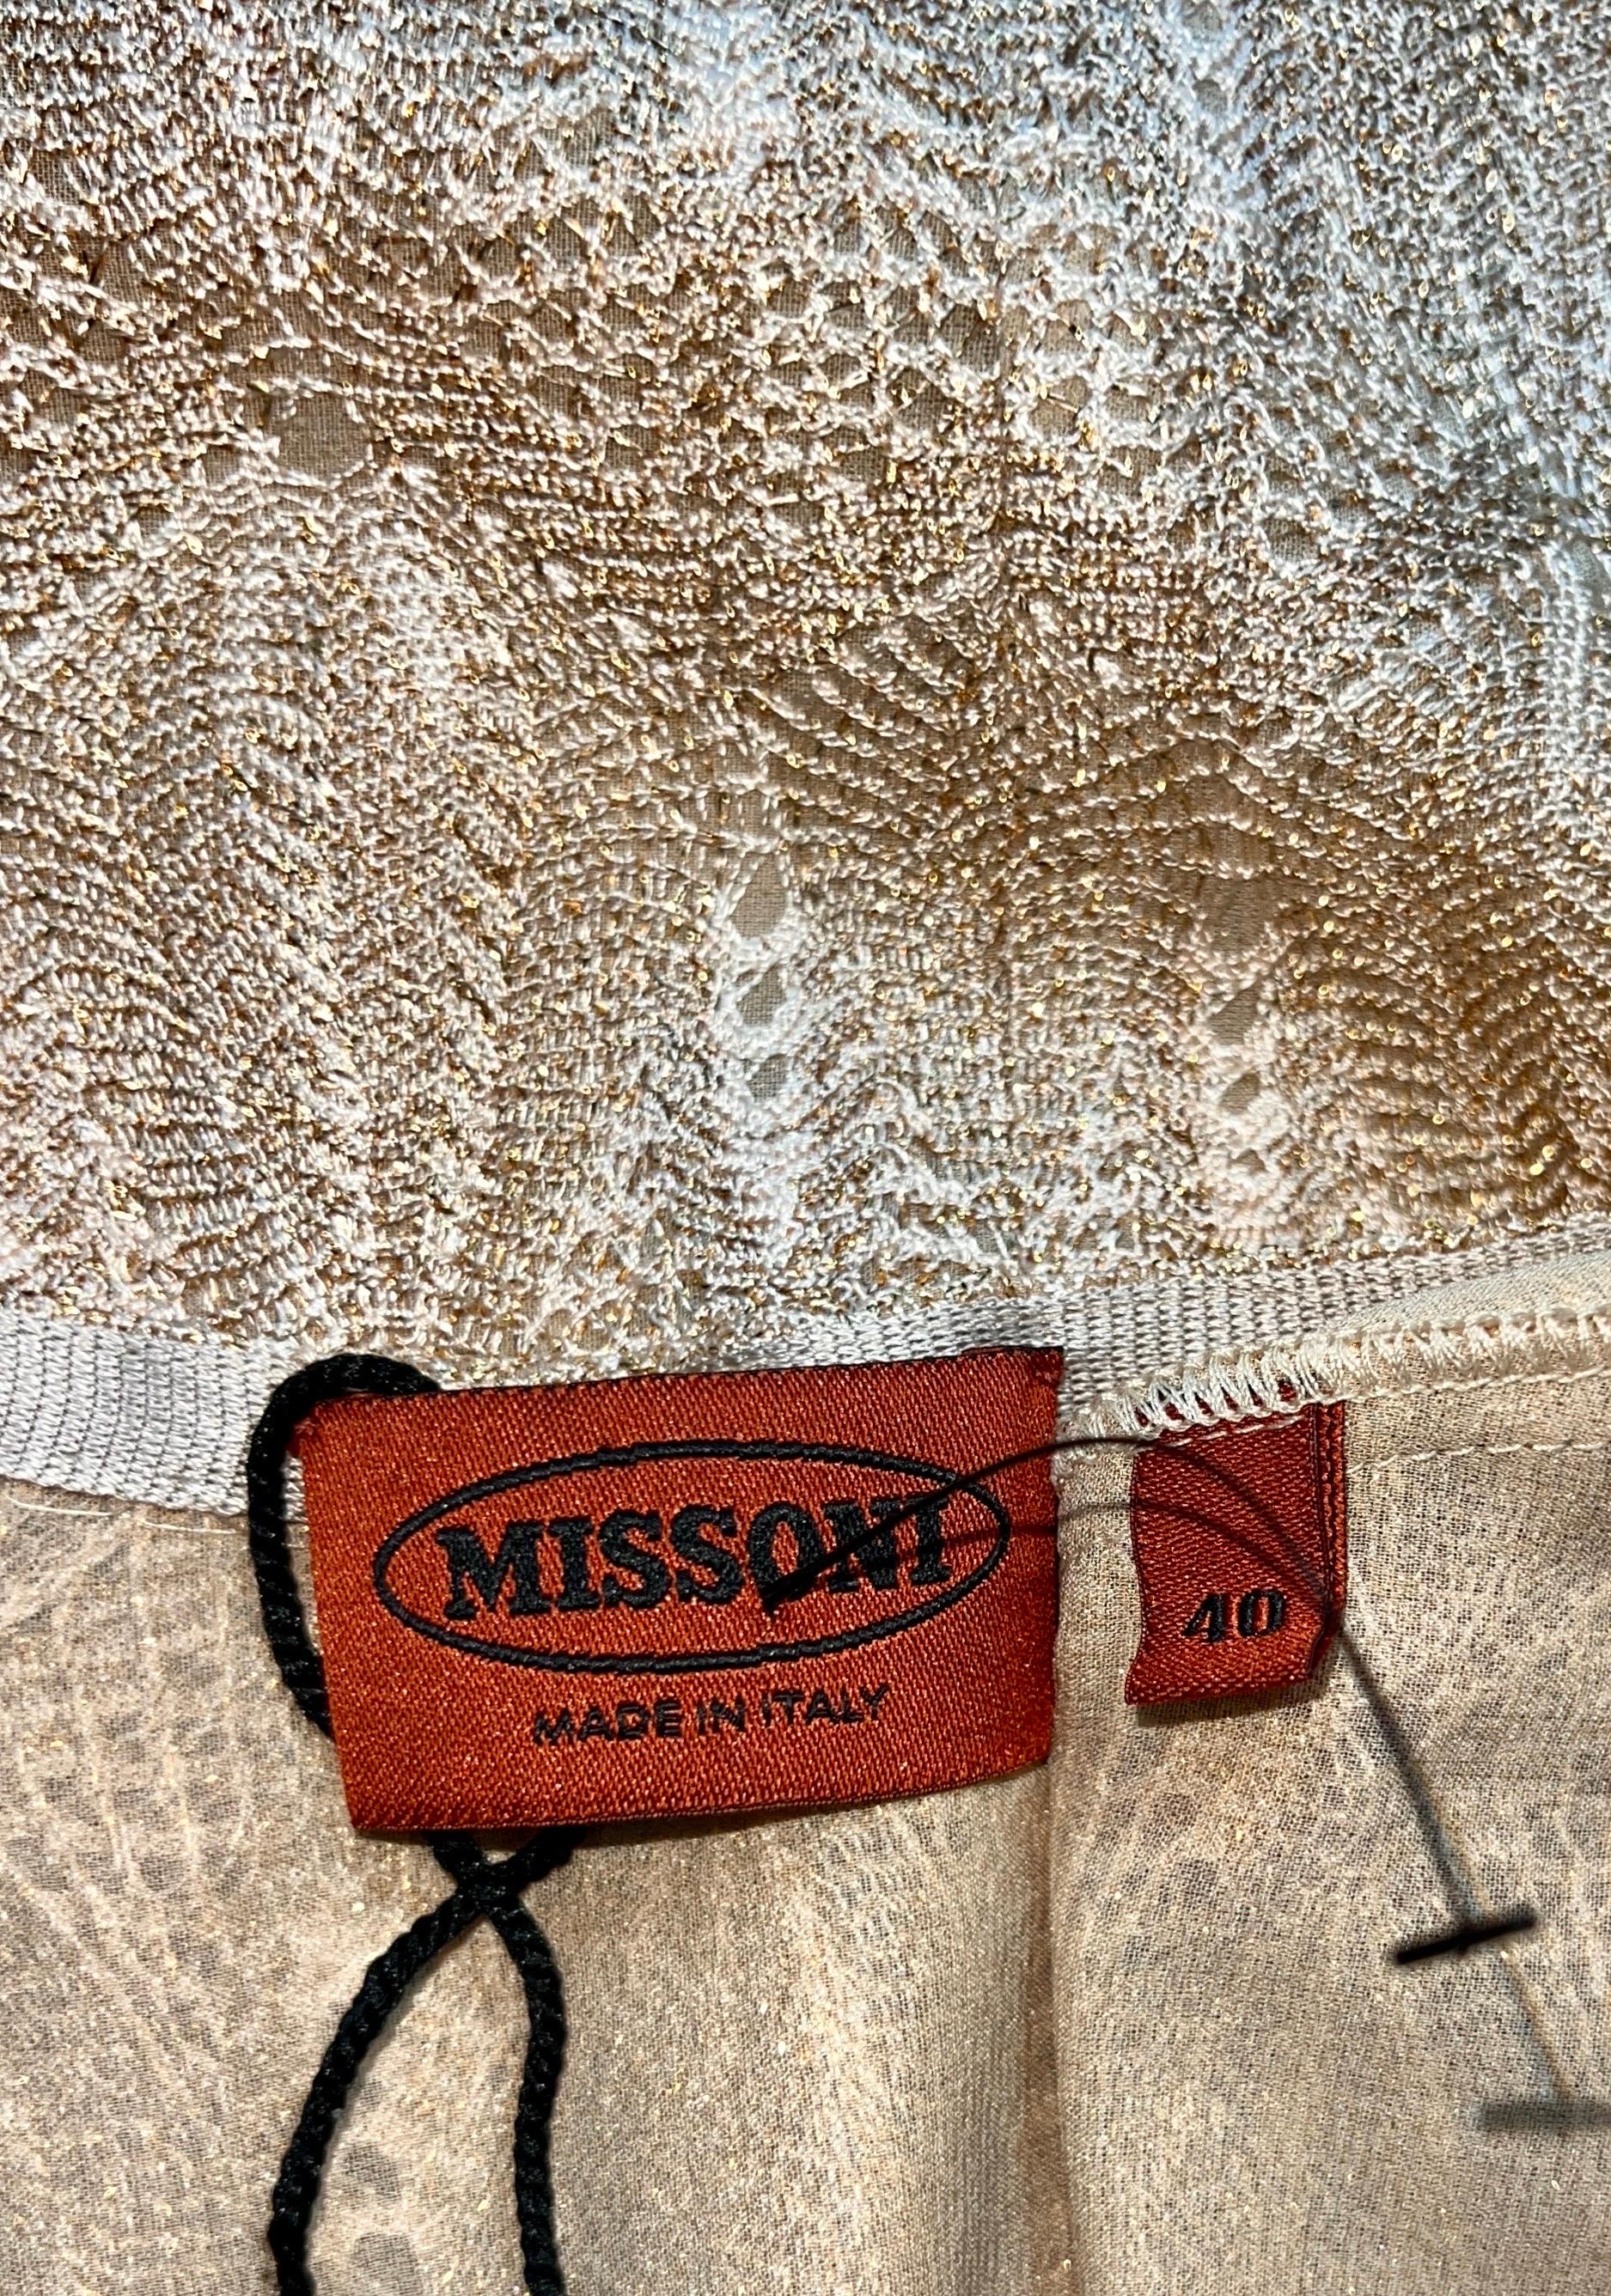 NEW Missoni Gold Metallic Crochet Knit & Fringe Belt/Scarf Dress 40 For Sale 3